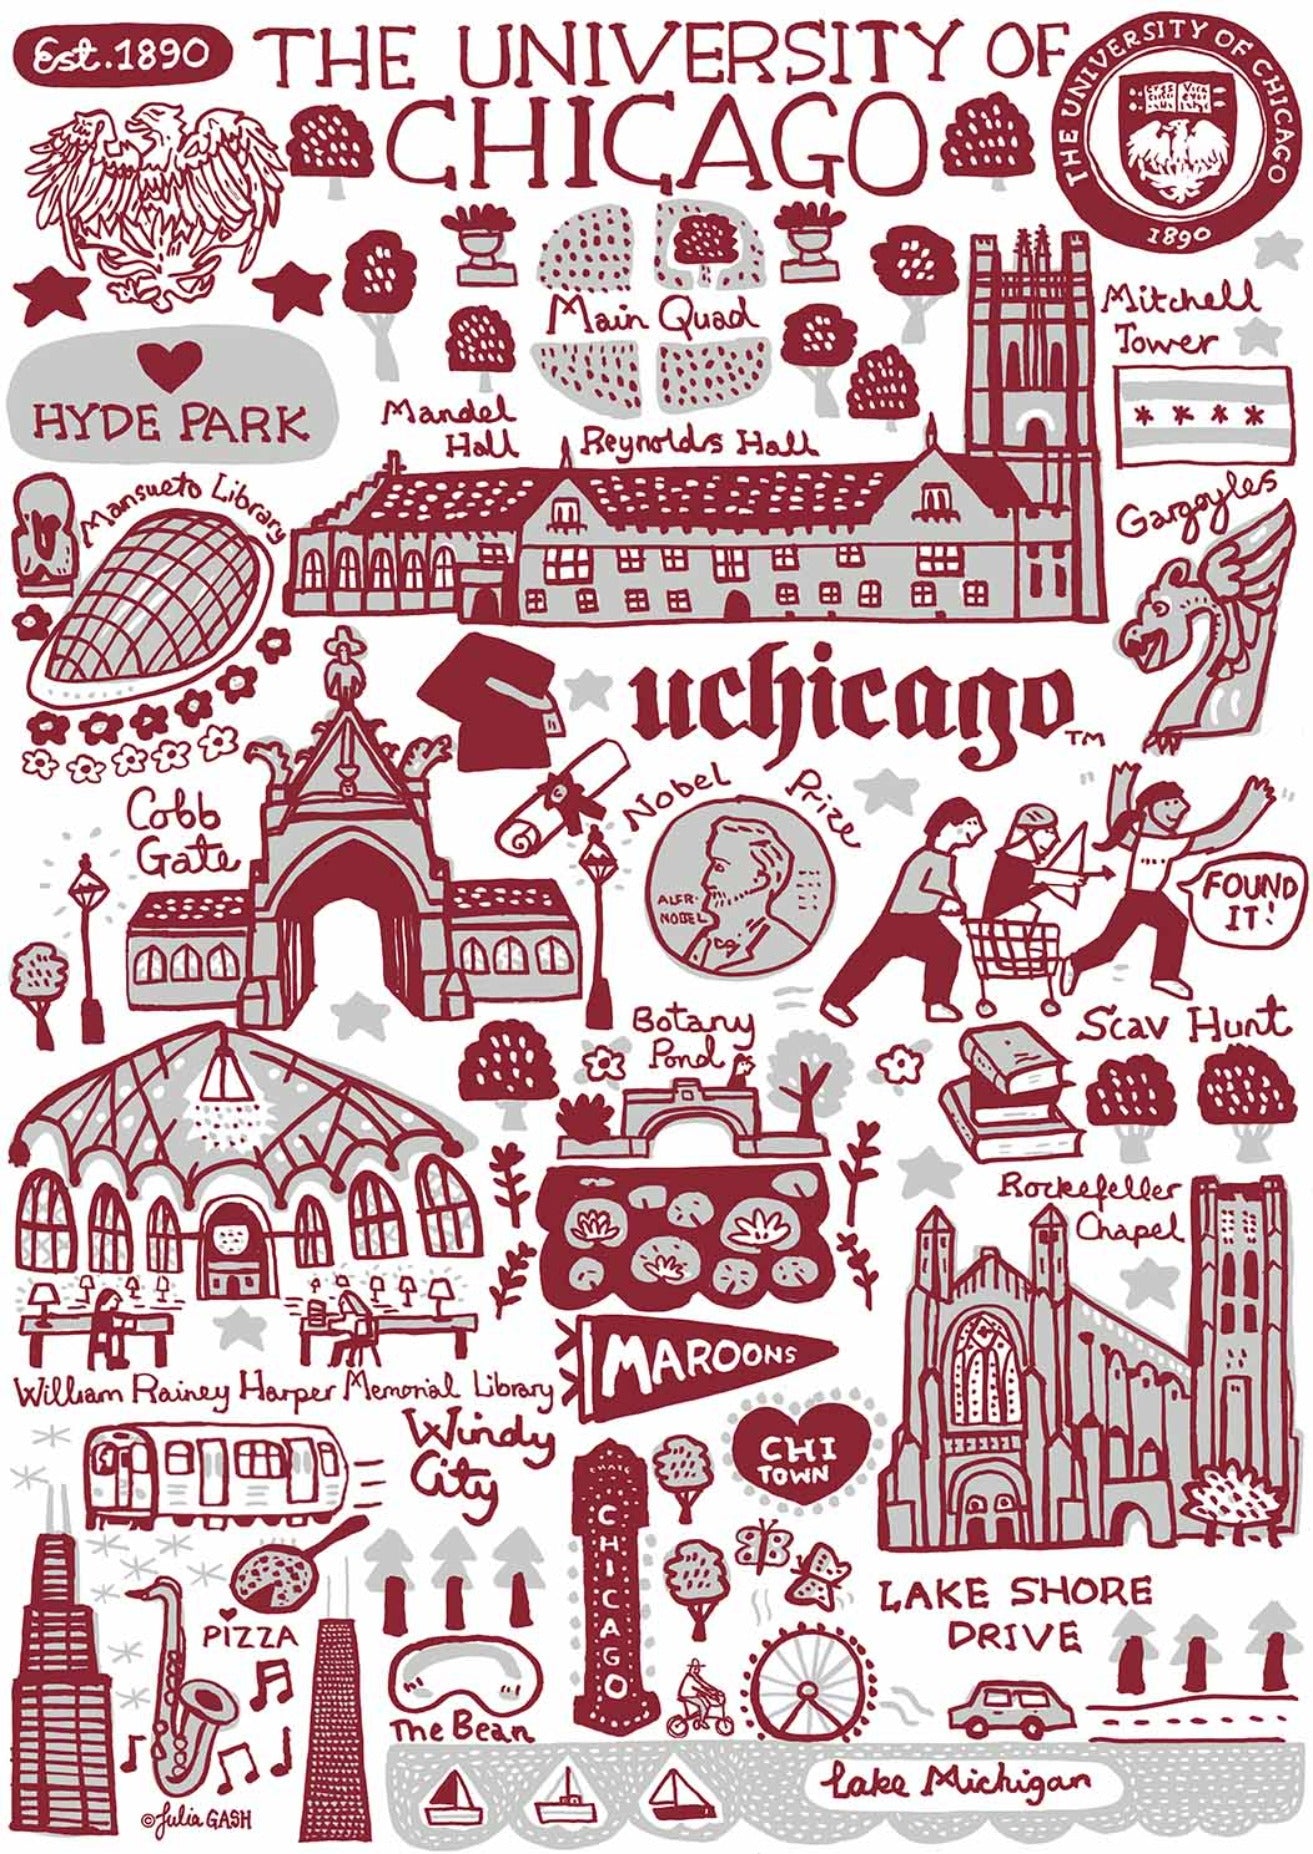 University of Chicago by Julia Gash